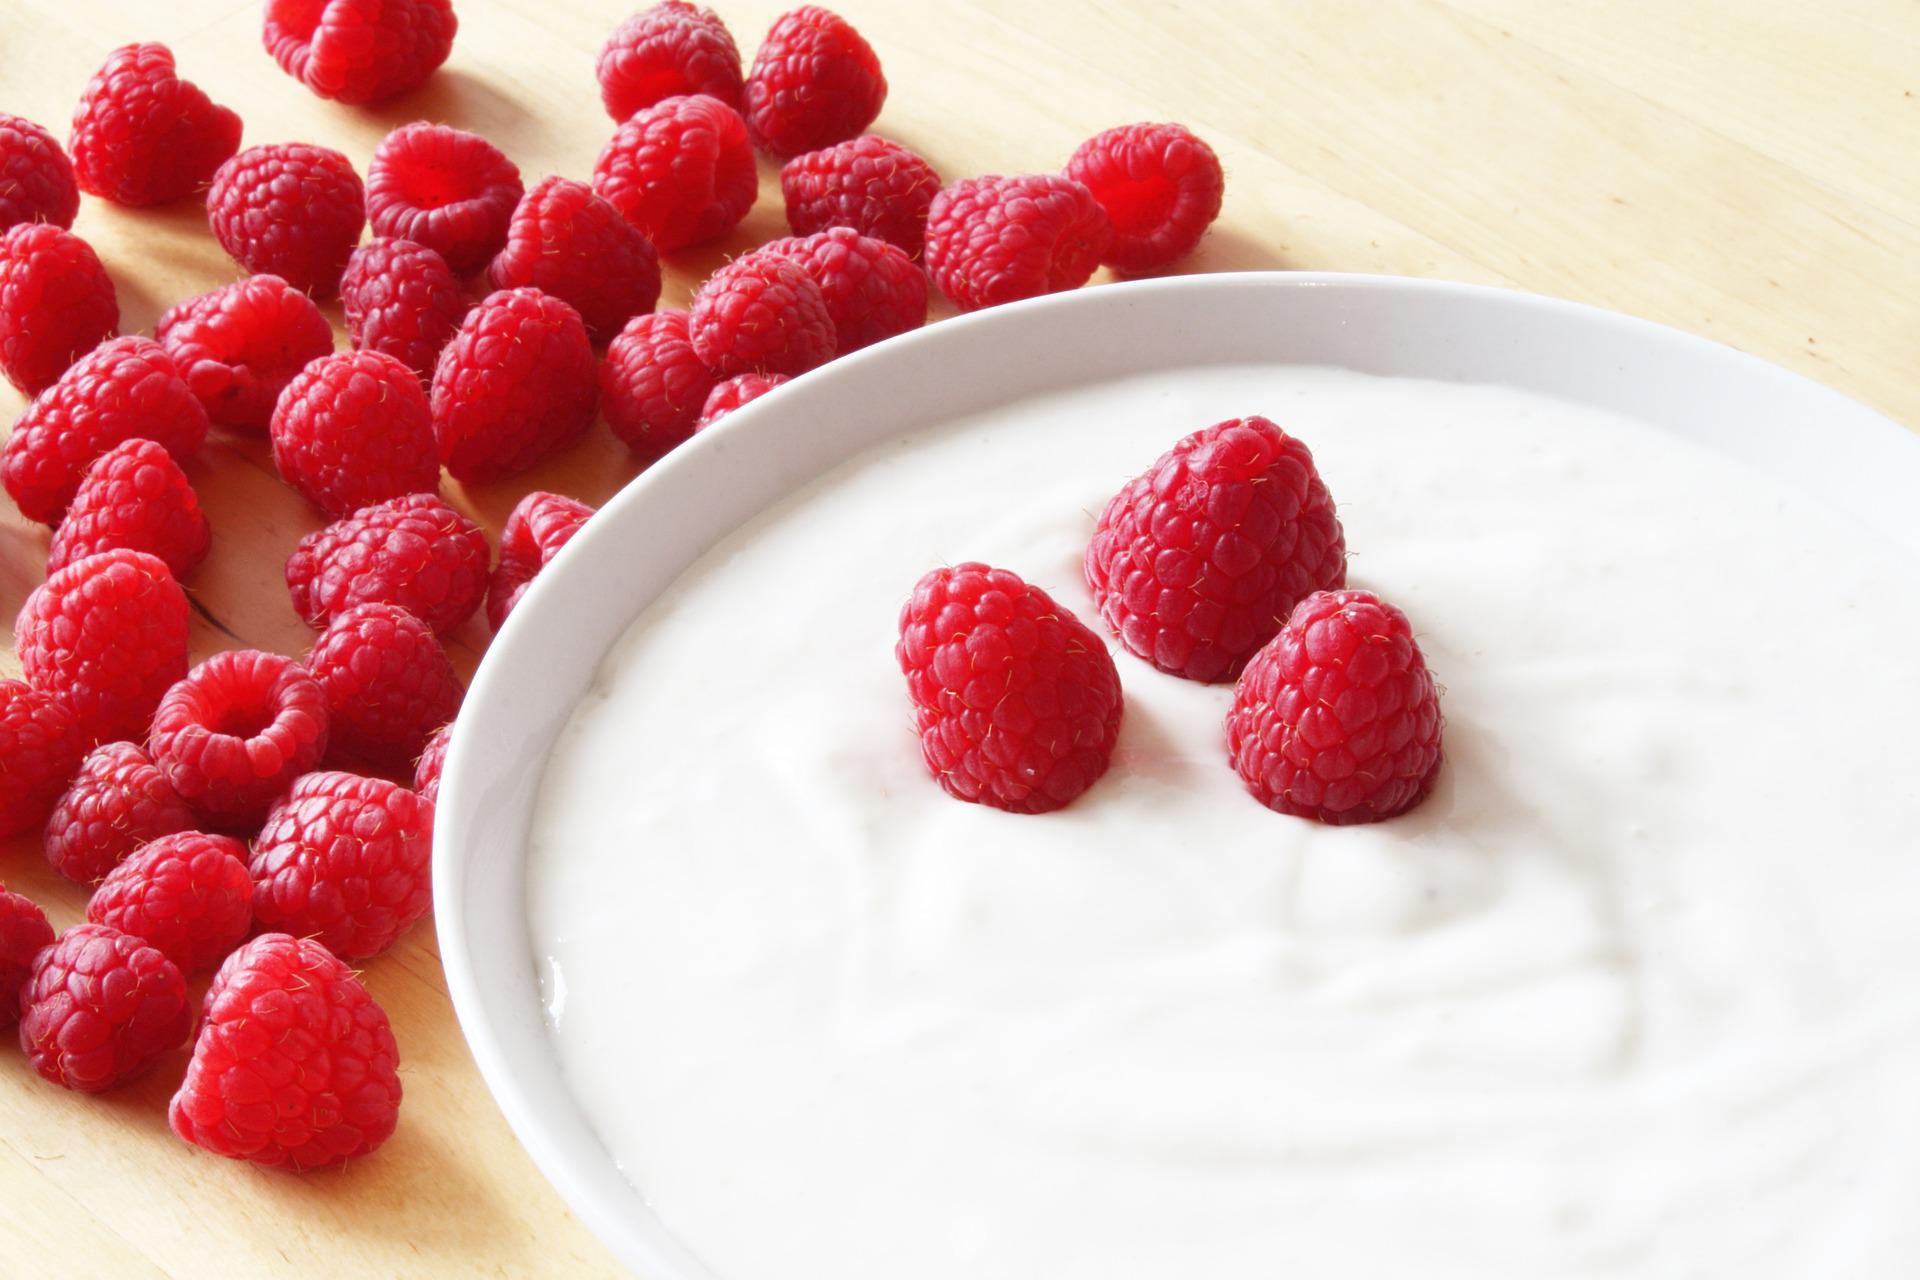 ILUSTRASI: Yoghurt dinilai dapat meredakan sakit lambung. (Pixabay)